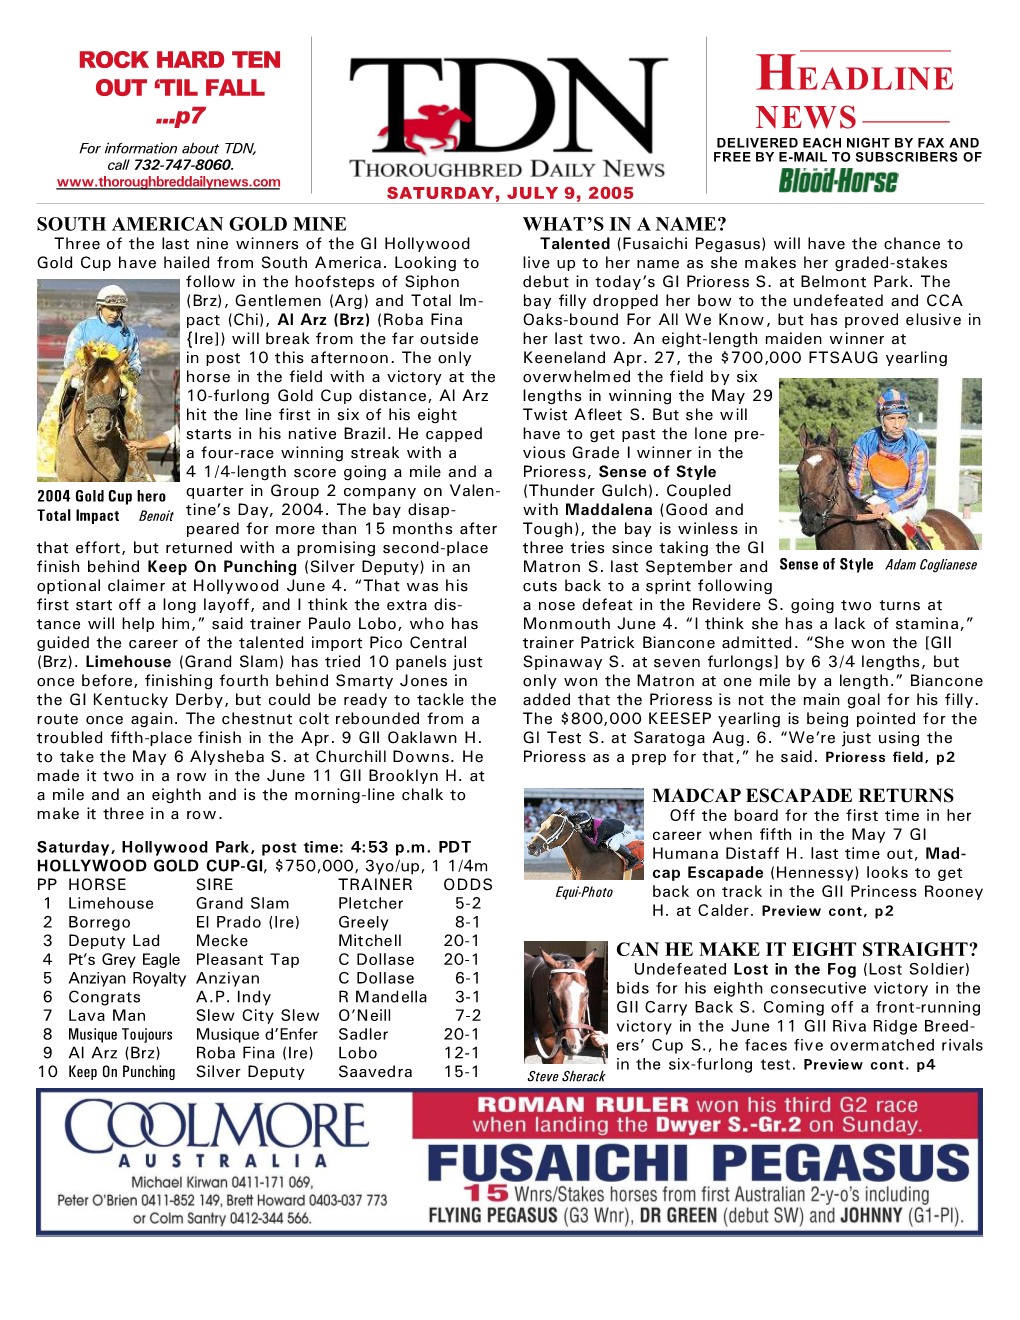 HEADLINE NEWS • 7/9/05 • PAGE 2 of 7